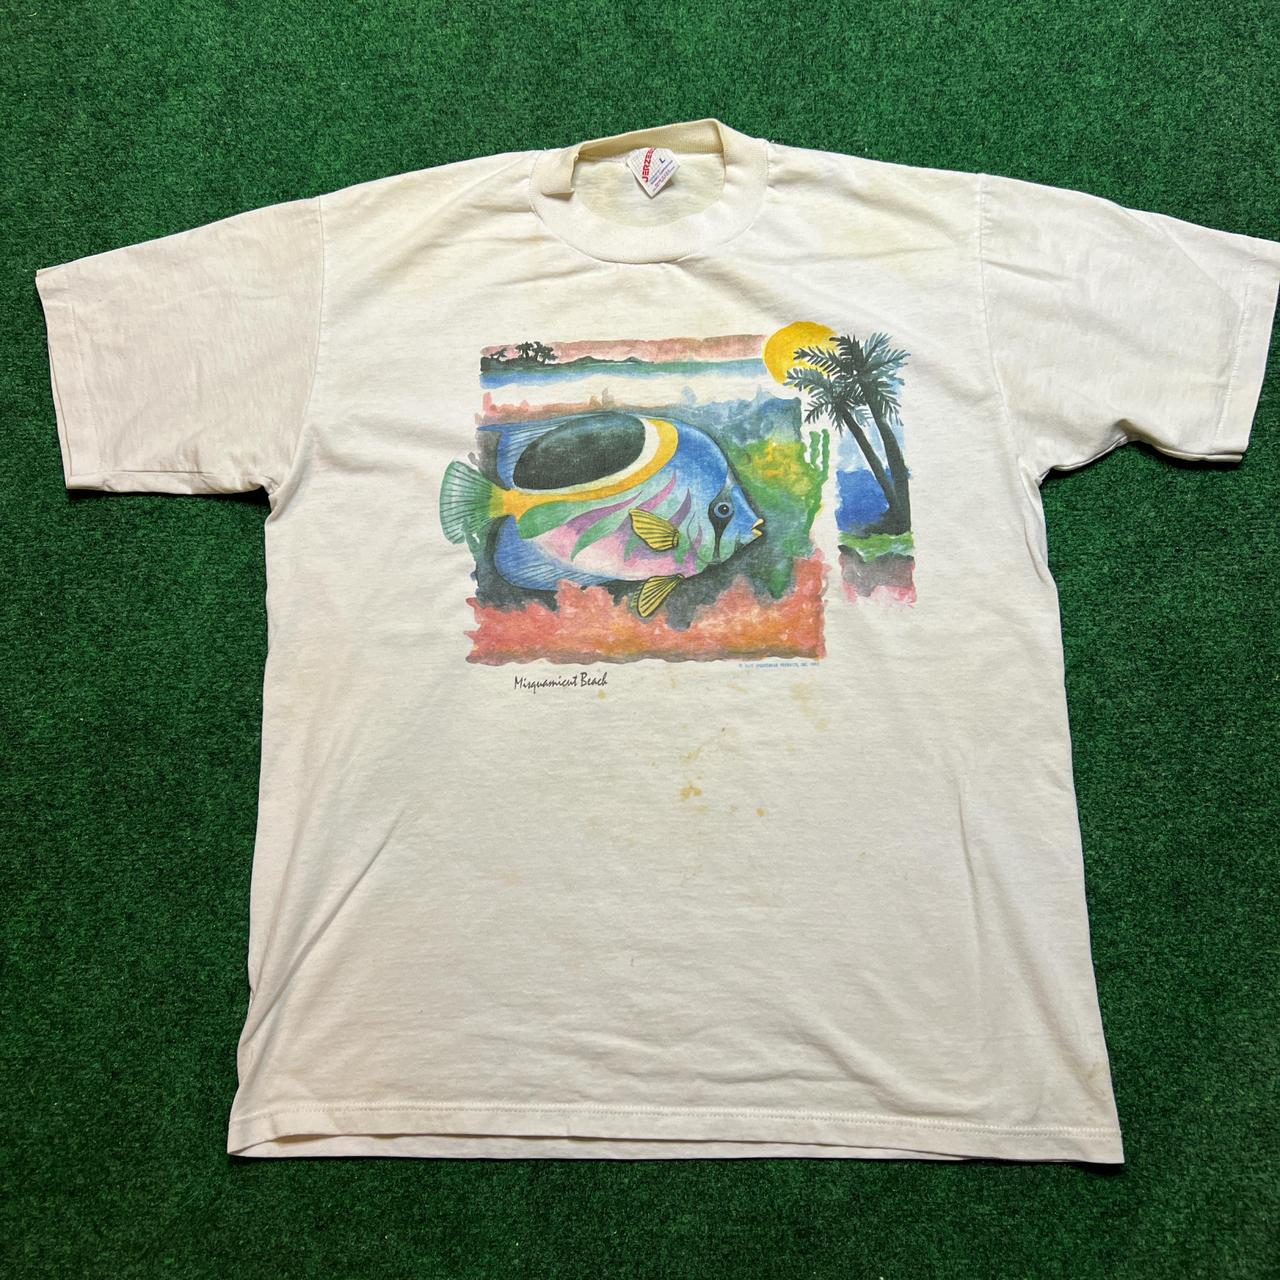 Vintage 1992 single stitch Aqua Fish Beach tee